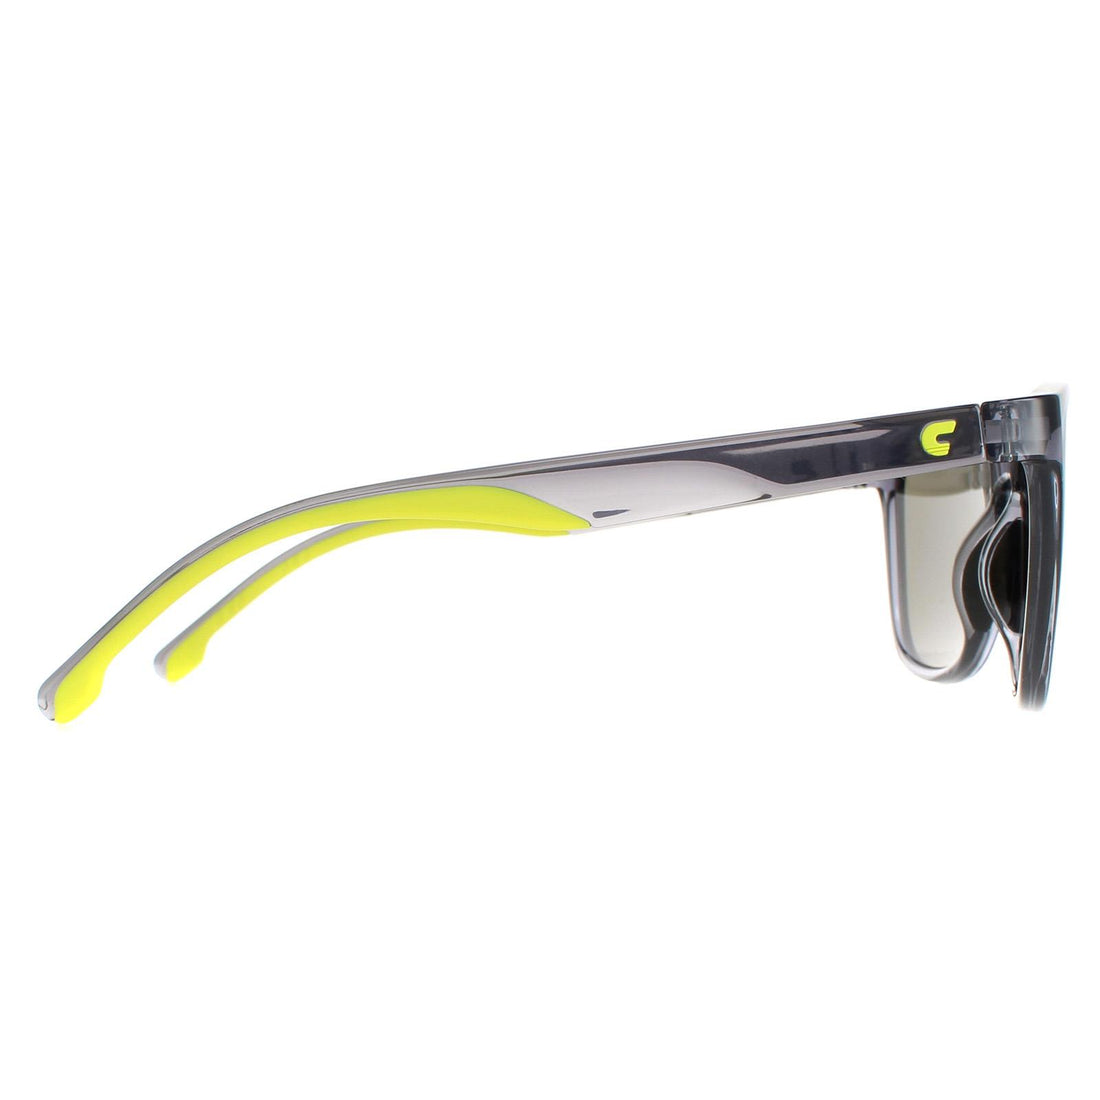 Carrera Sunglasses 8058/S KB7 Z9 Grey Green Multilayer Mirror